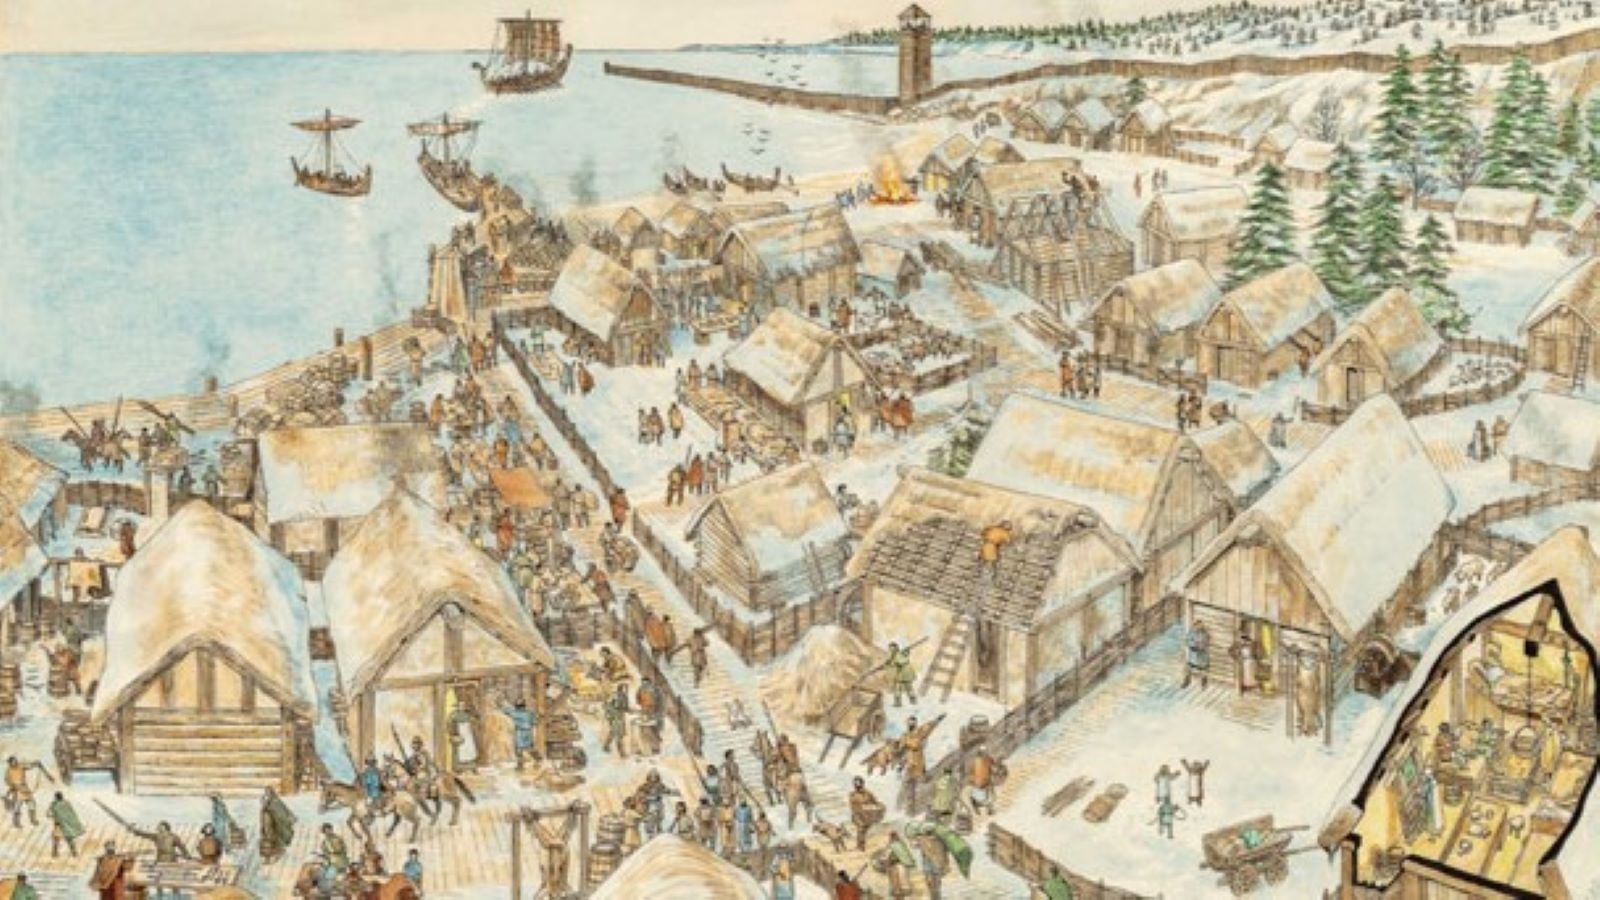 How Did Norsemen/Vikings Build Their Villages?